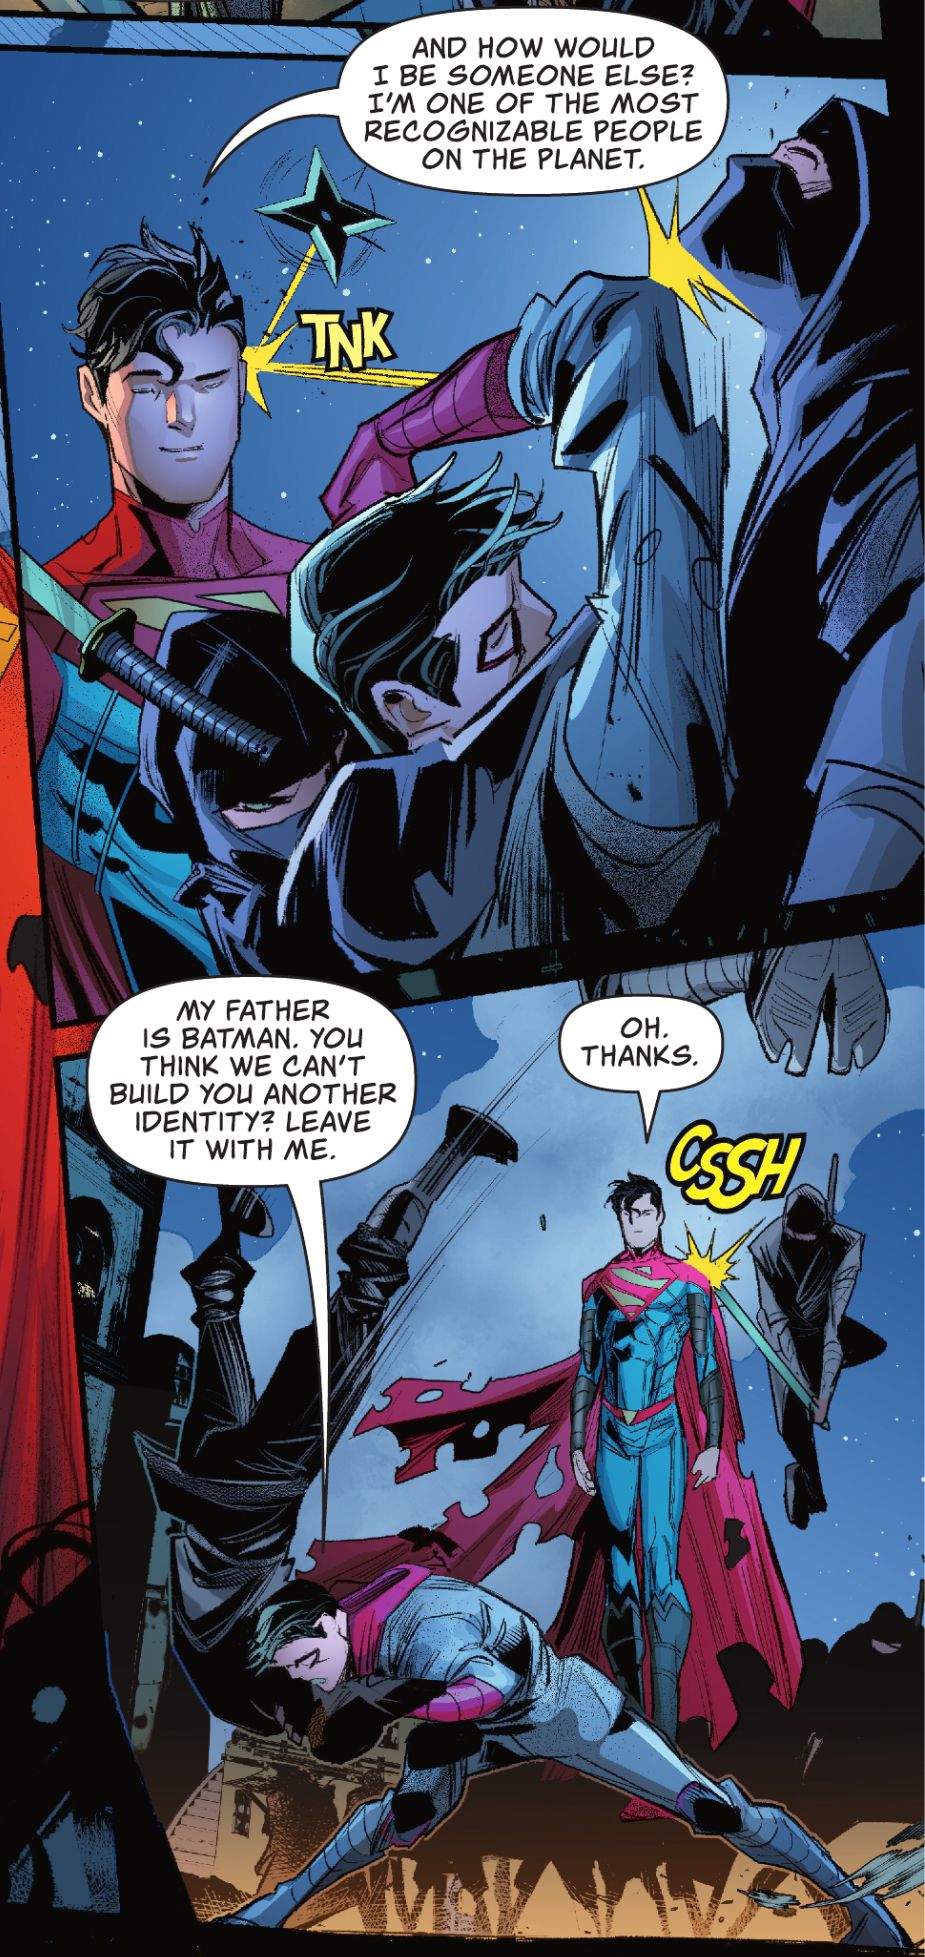 Jon Kent/Superman parla con Damian Wayne/Robin mentre le armi ninja rimbalzano innocue su di lui in Superman: Son of Kal-El #1 (2021).